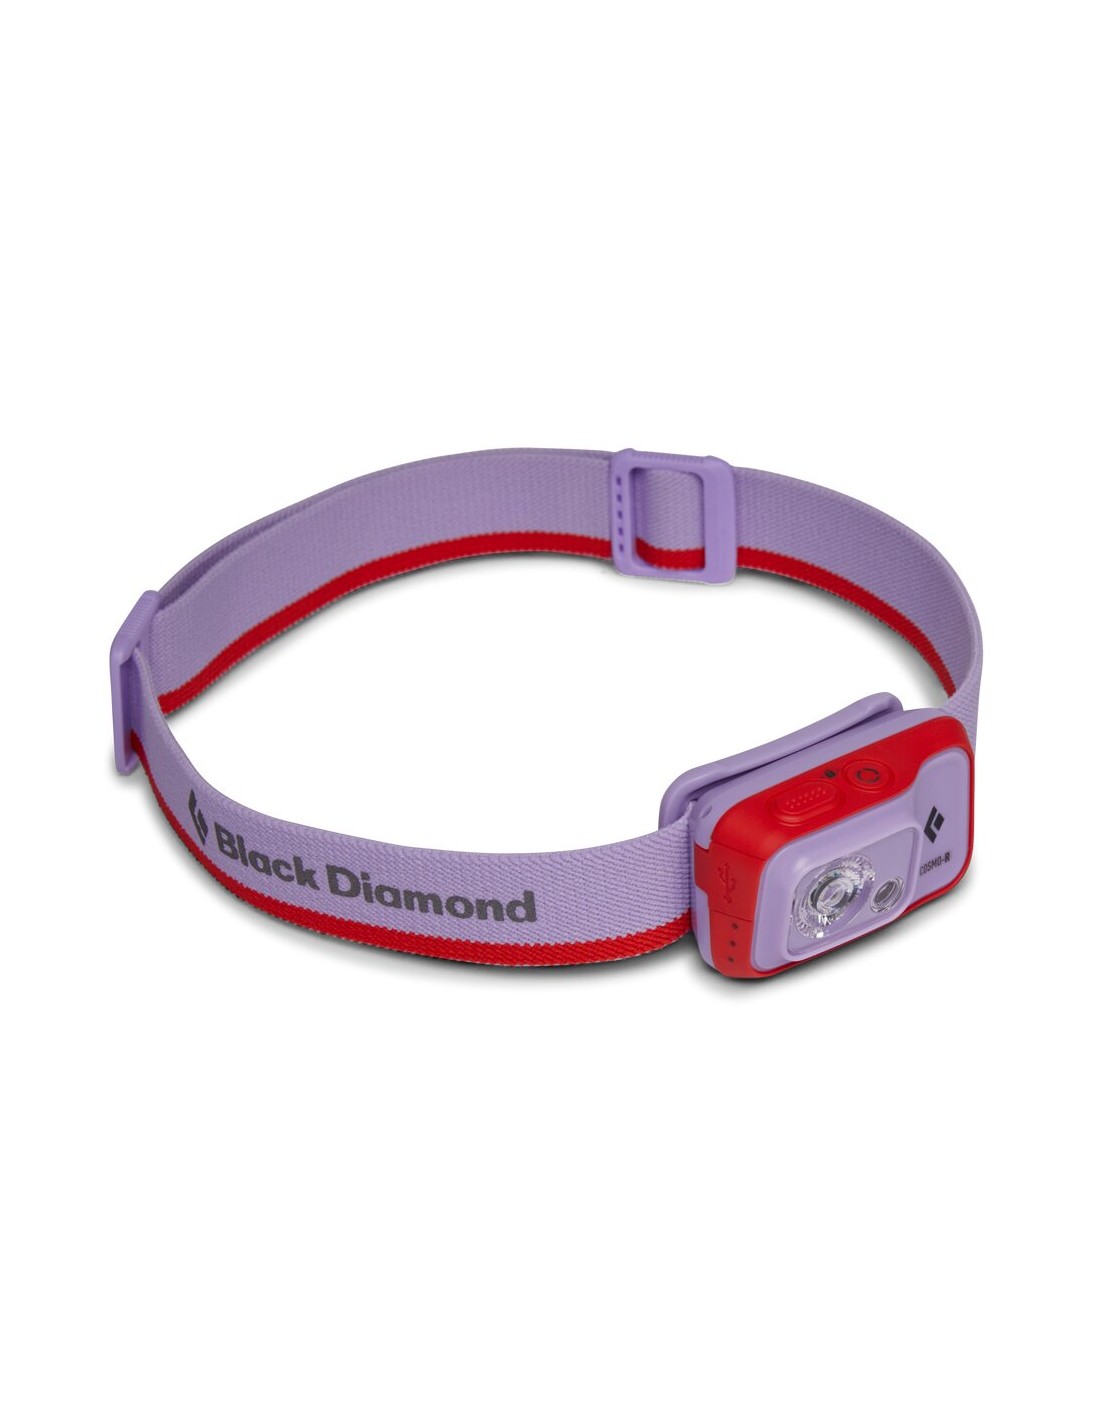 Black Diamond Stirnlampe Cosmo 350-R, lilac